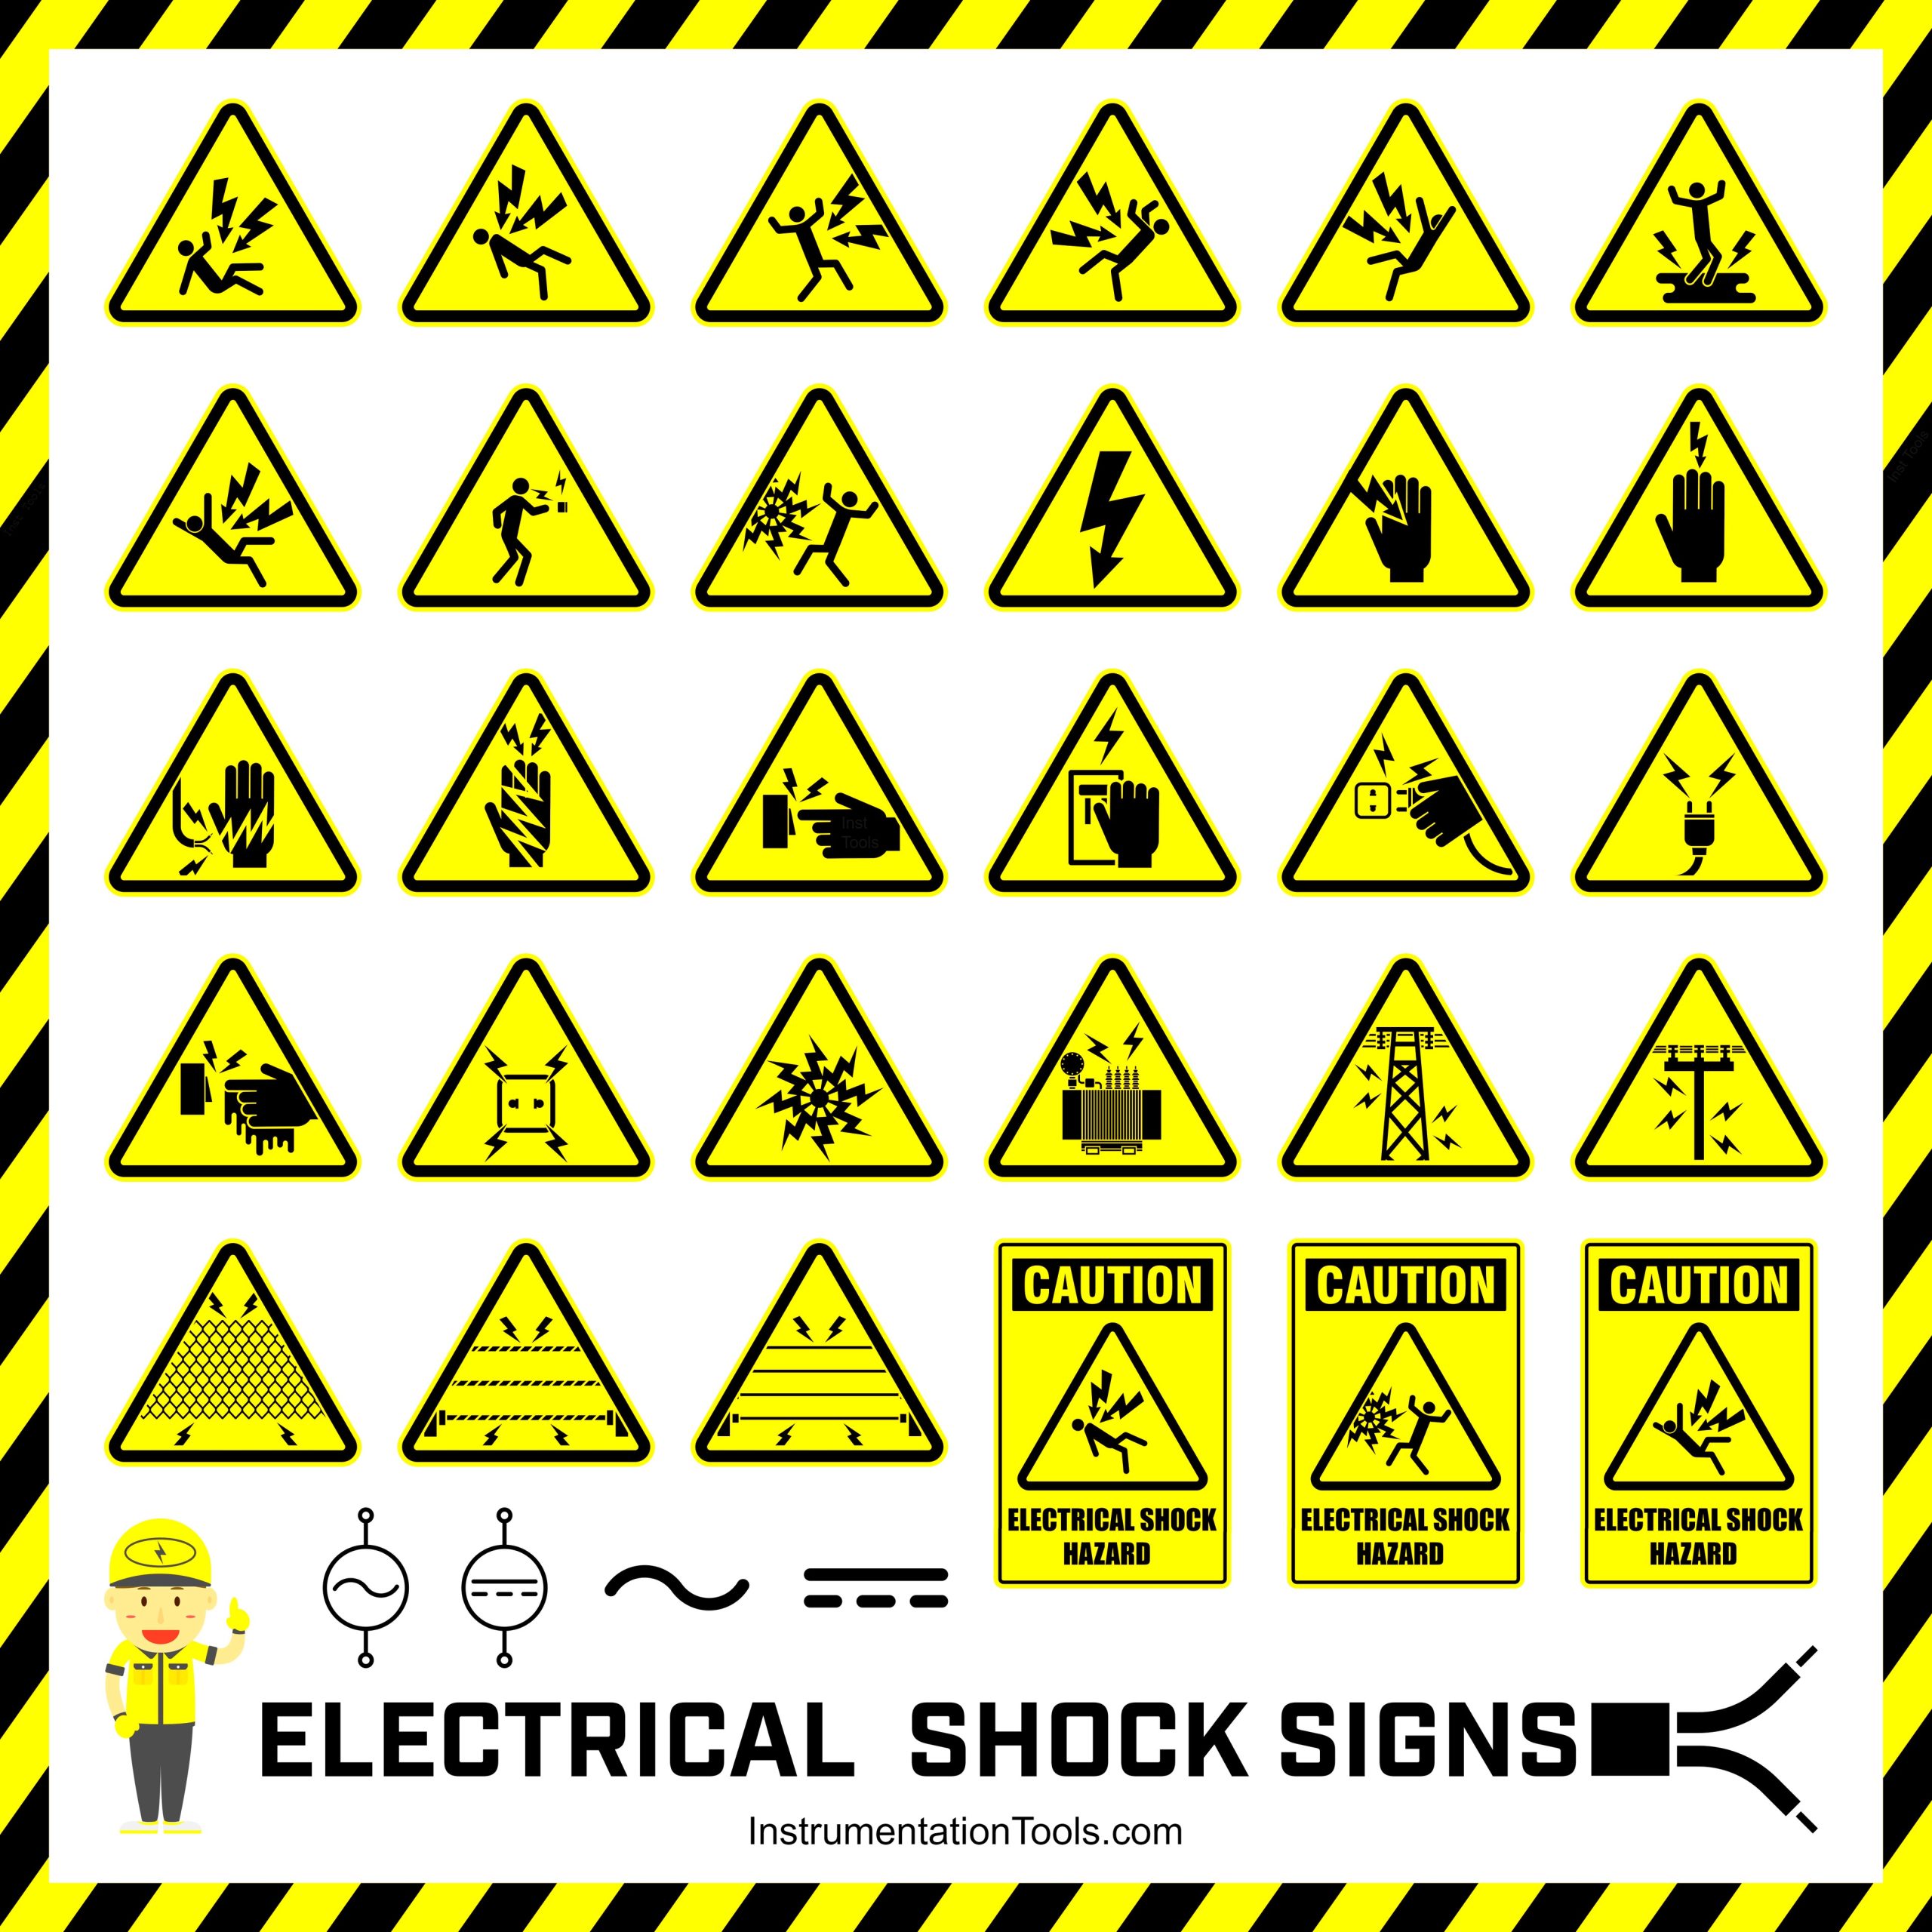 Electrical shock hazard safety symbols